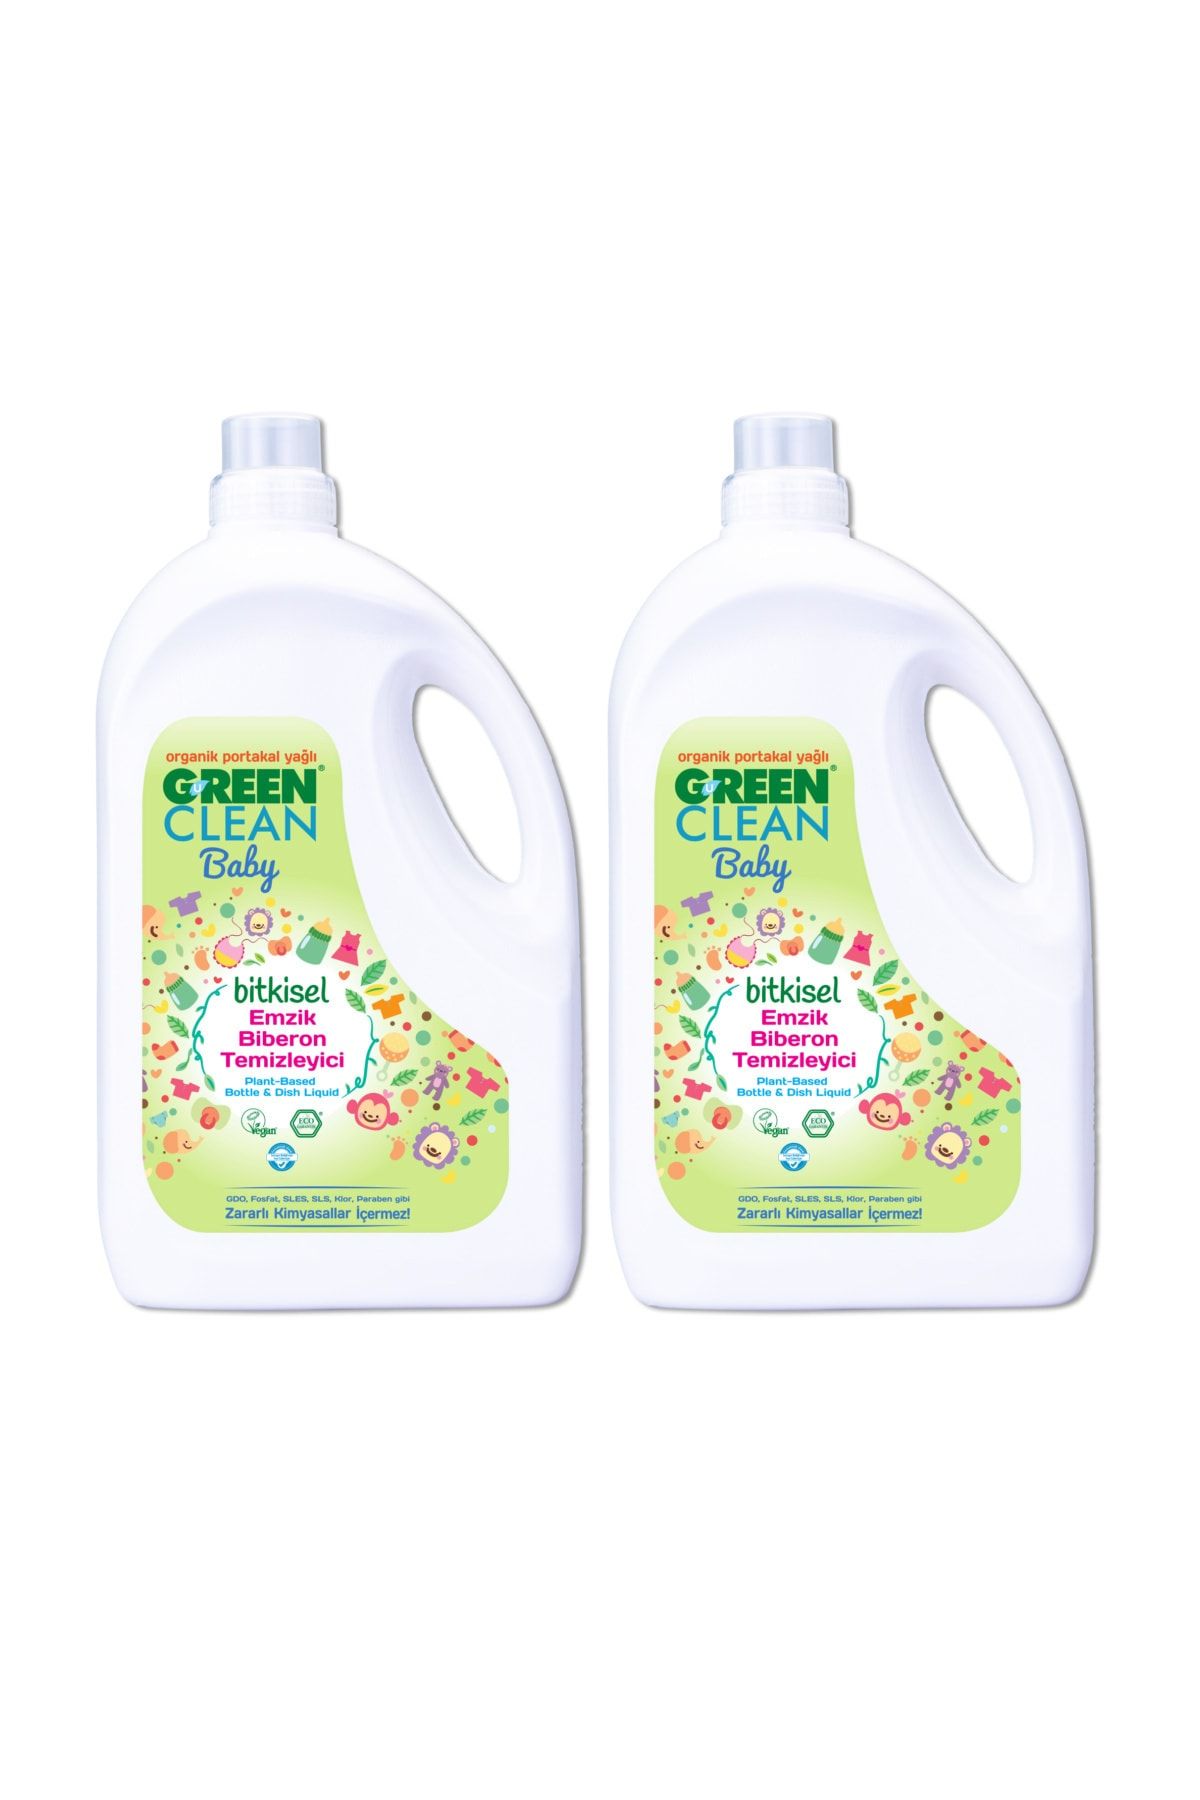 Green Clean Baby Organik Portakal Yağlı Bitkisel Emzik Biberon Temizleyici 2,75 L 2'li